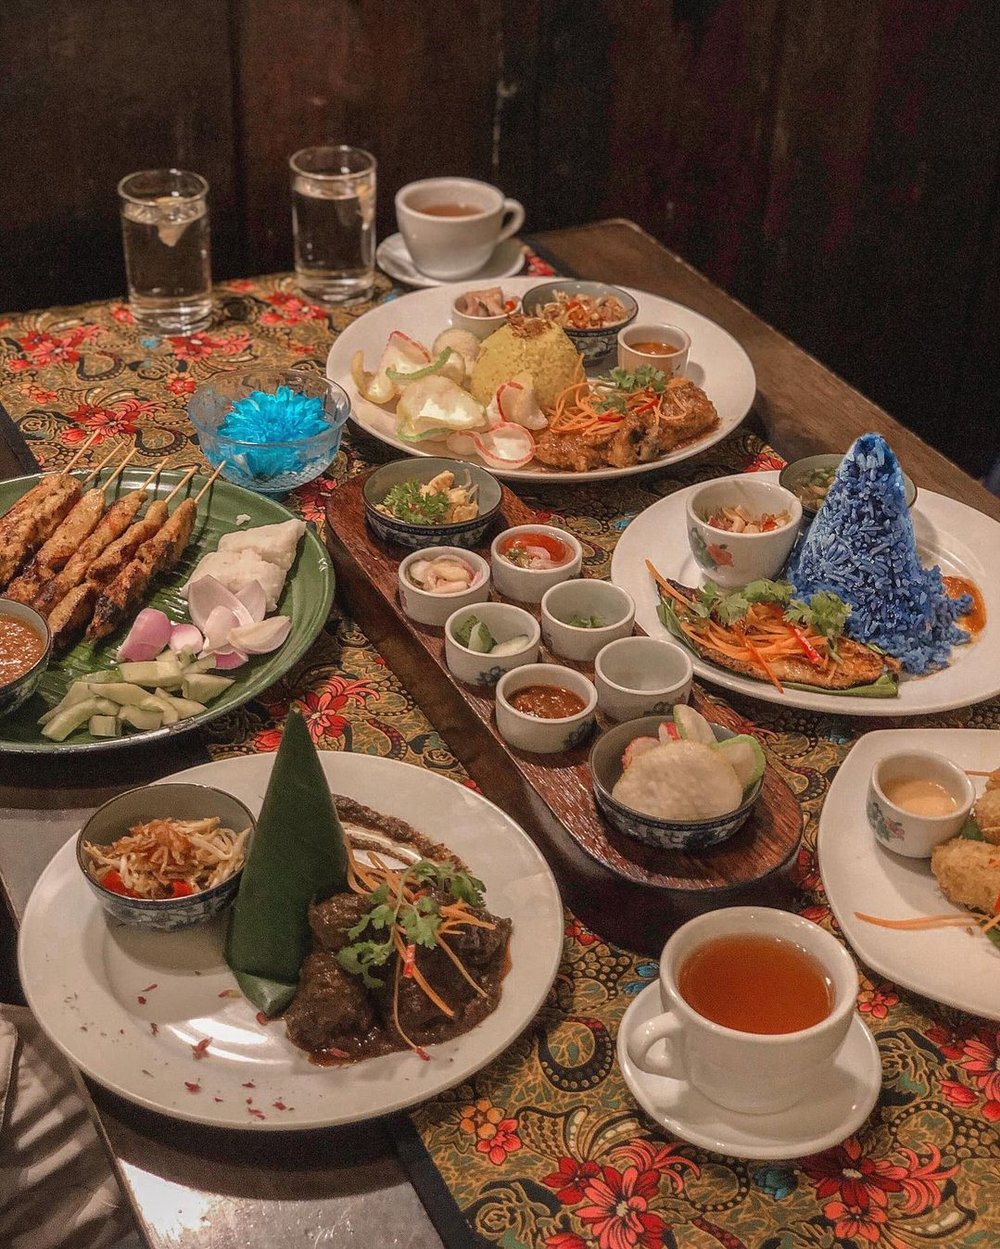 15 Best Halal Food In Penang: Muslim-friendly Restaurants Serving Yummy